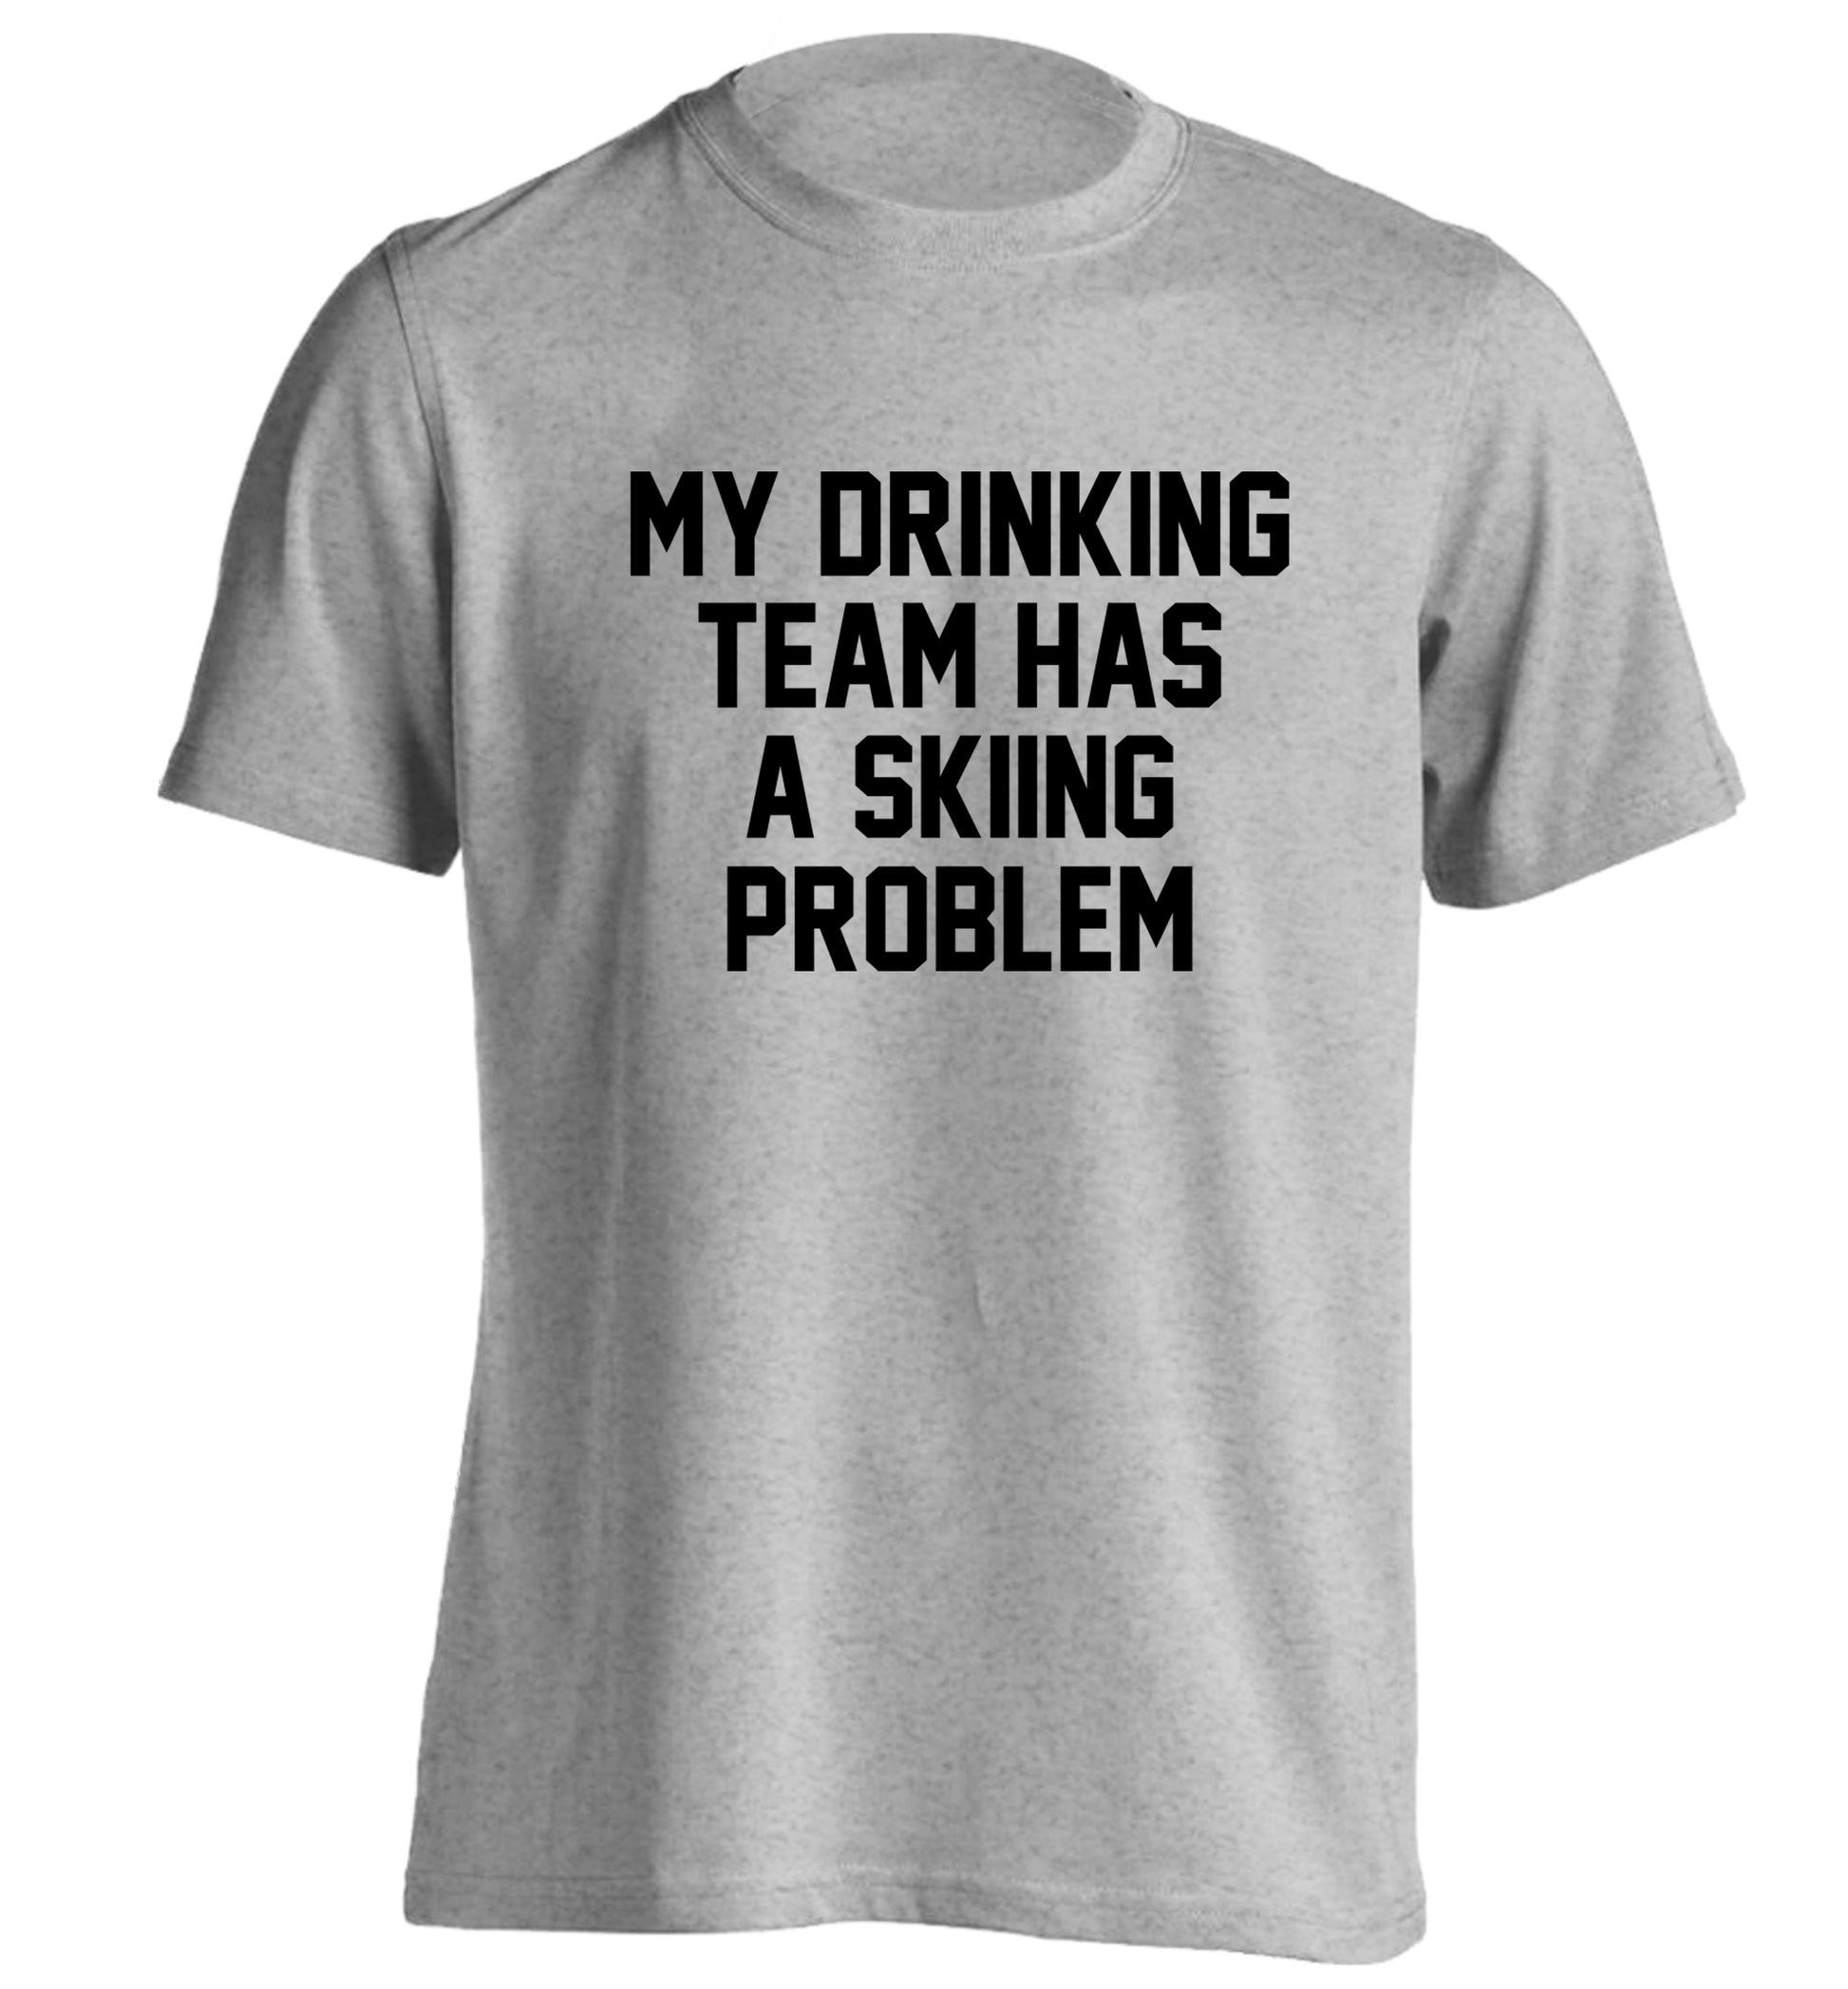 My drinking team has a skiing problem adults unisexgrey Tshirt 2XL